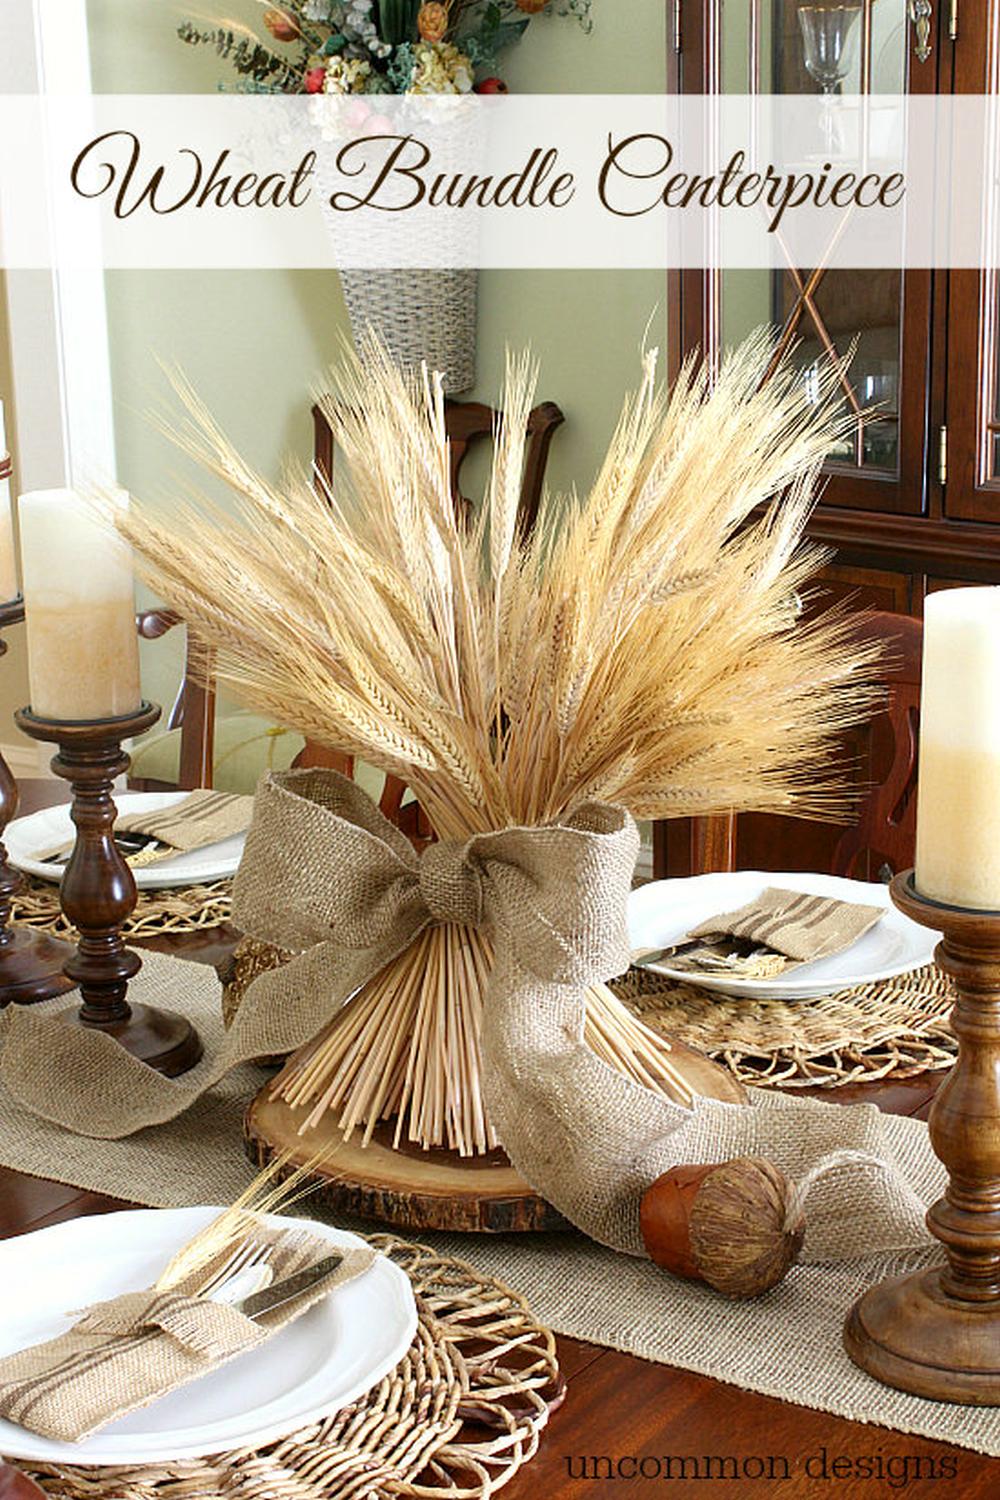 Wheat bundle thanksgiving centerpiece ideas 